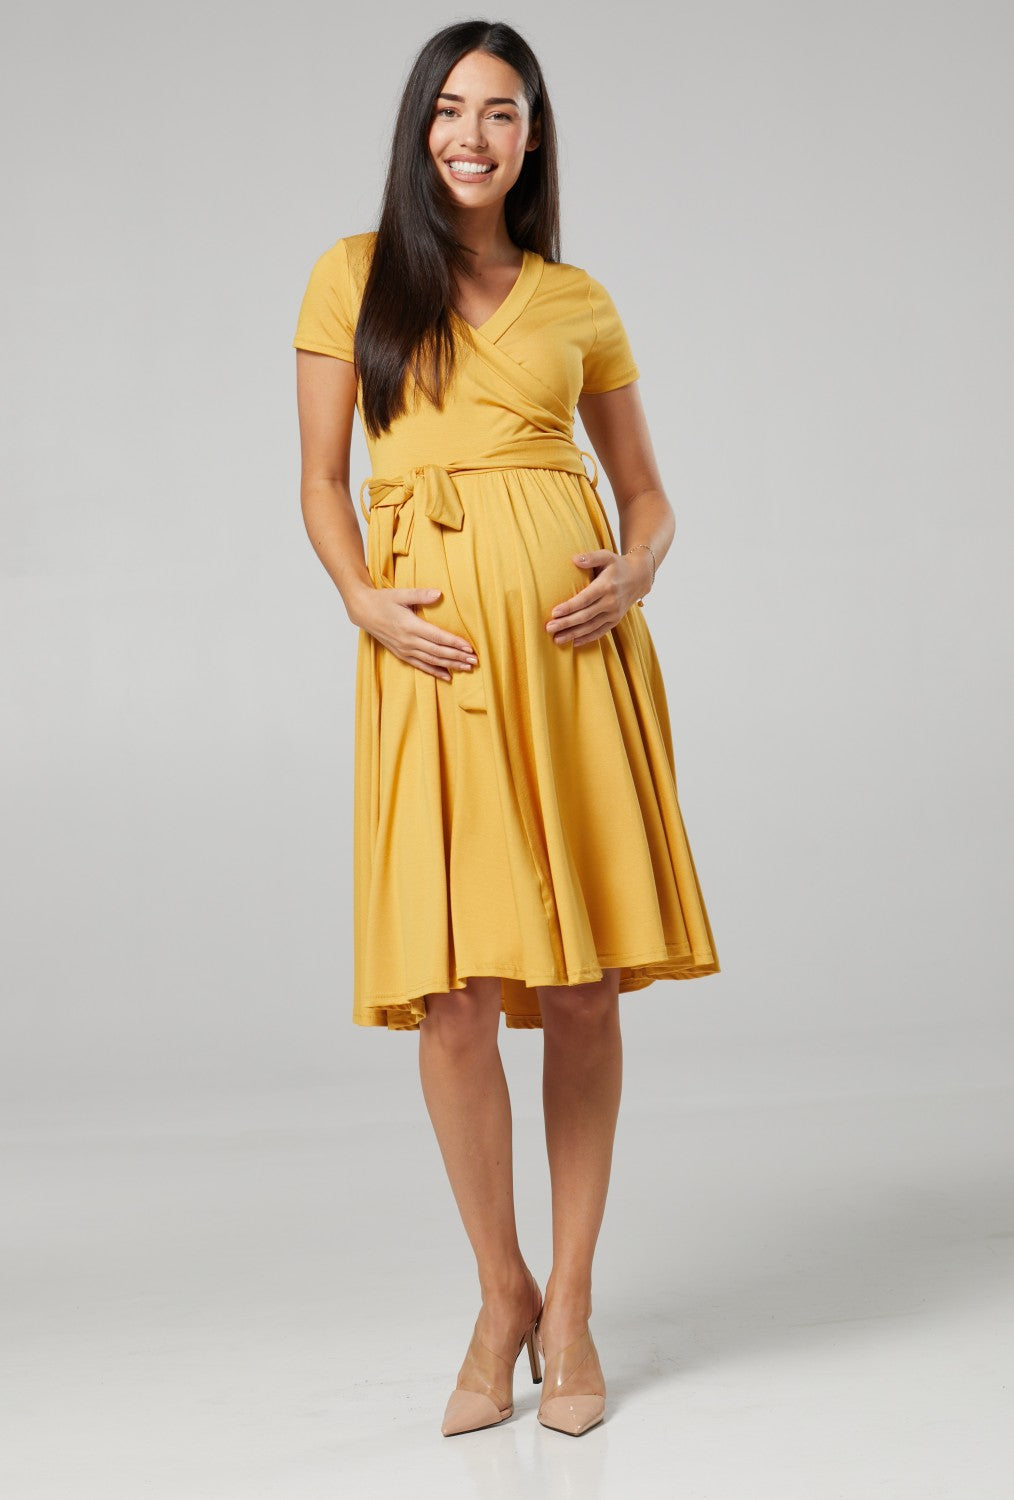 Maternity Wrap Empire Waist Nursing Dress in Jersey